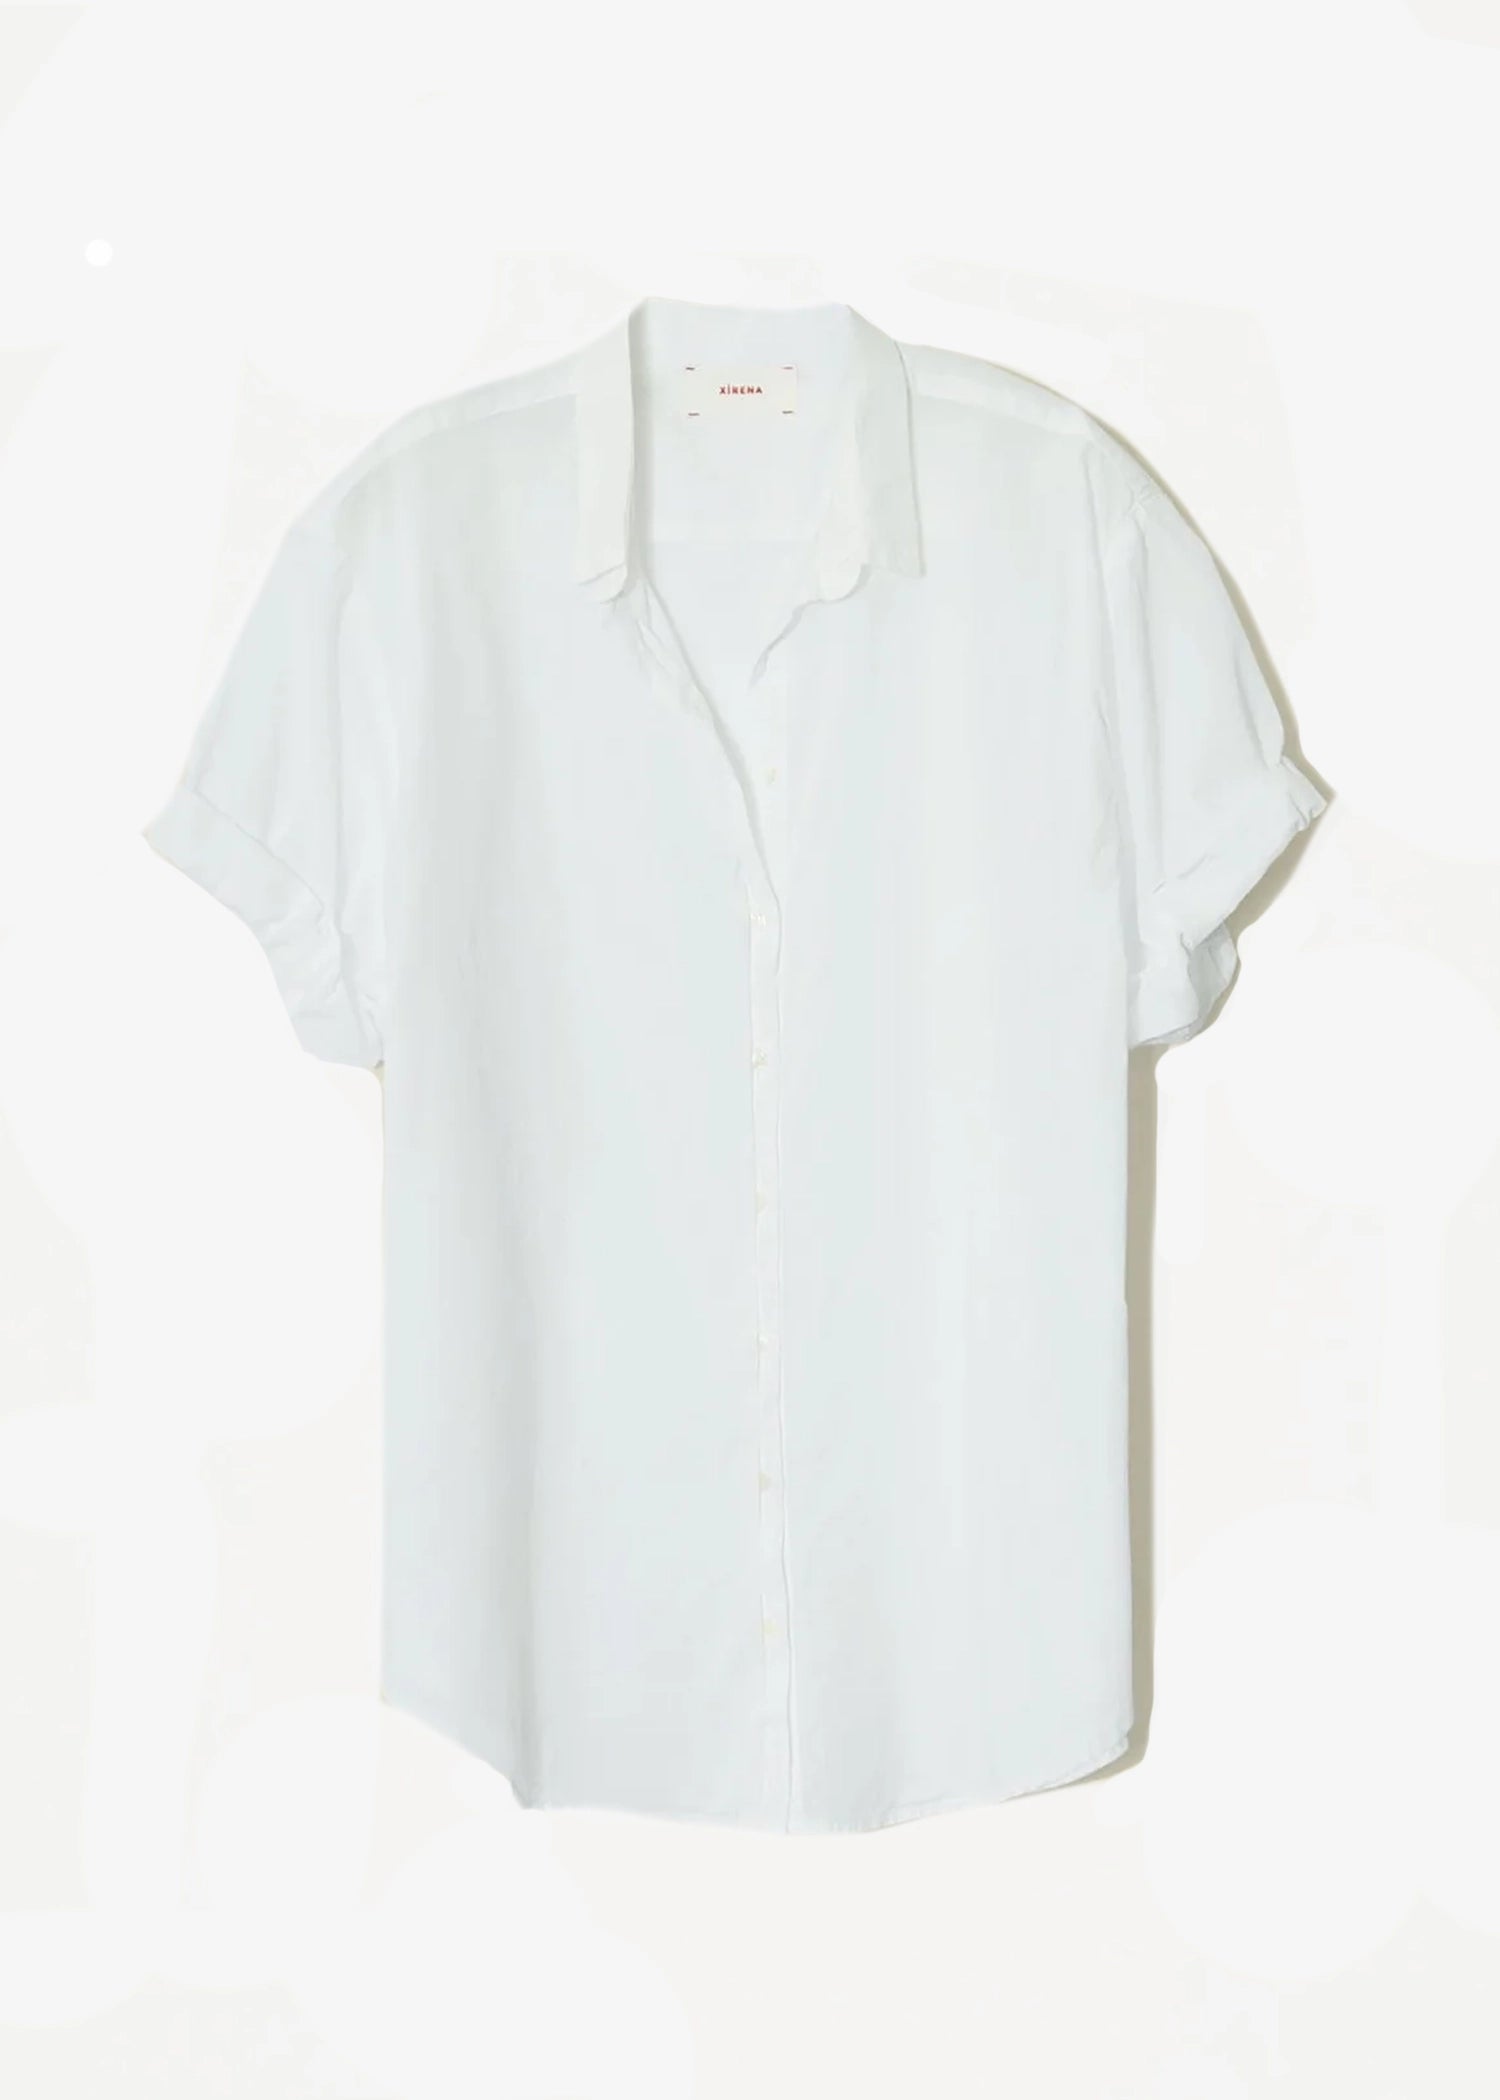 Xirena-channing-shirt-white